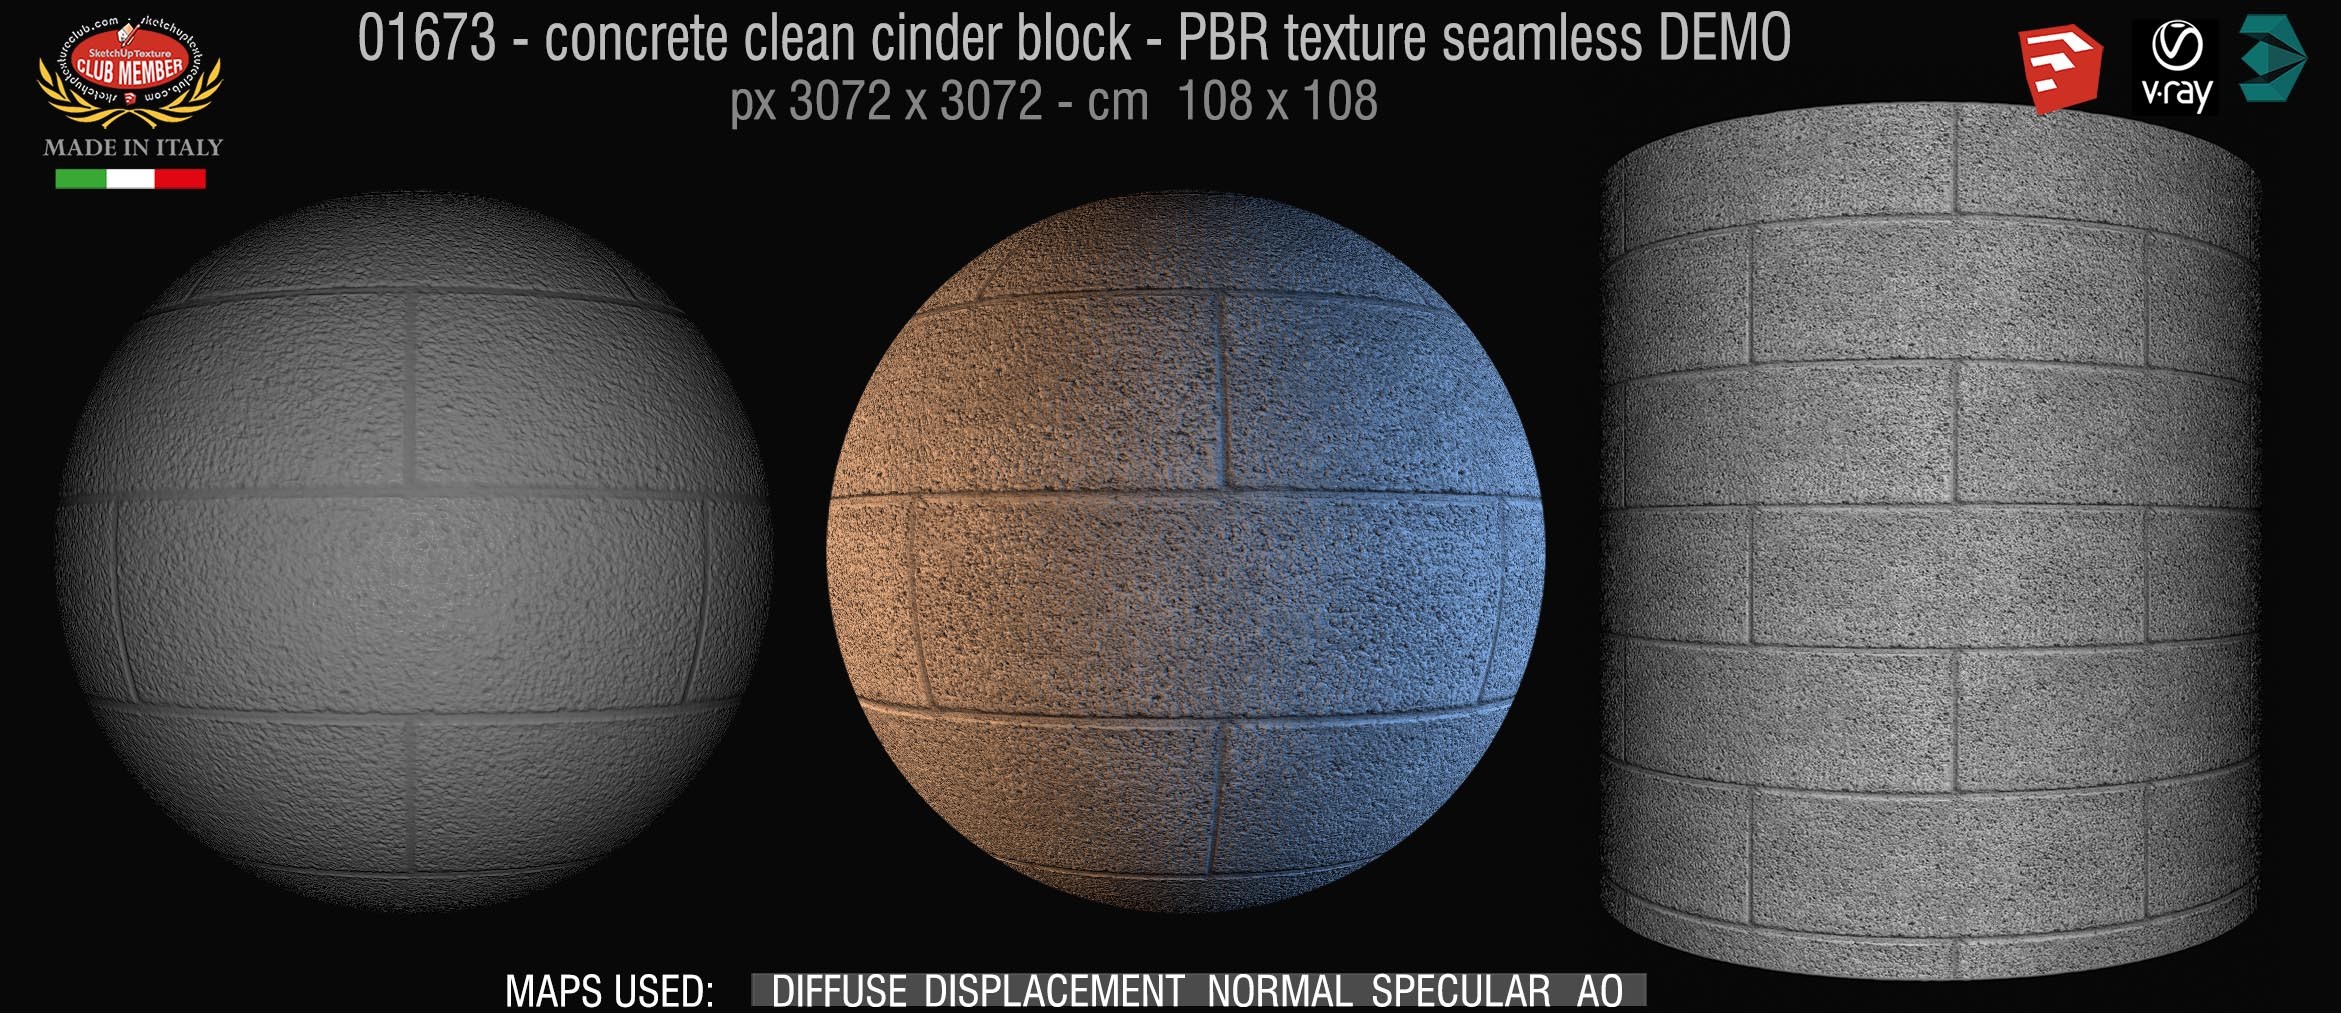 01673 concrete clean cinder block PBR texture seamless DEMO